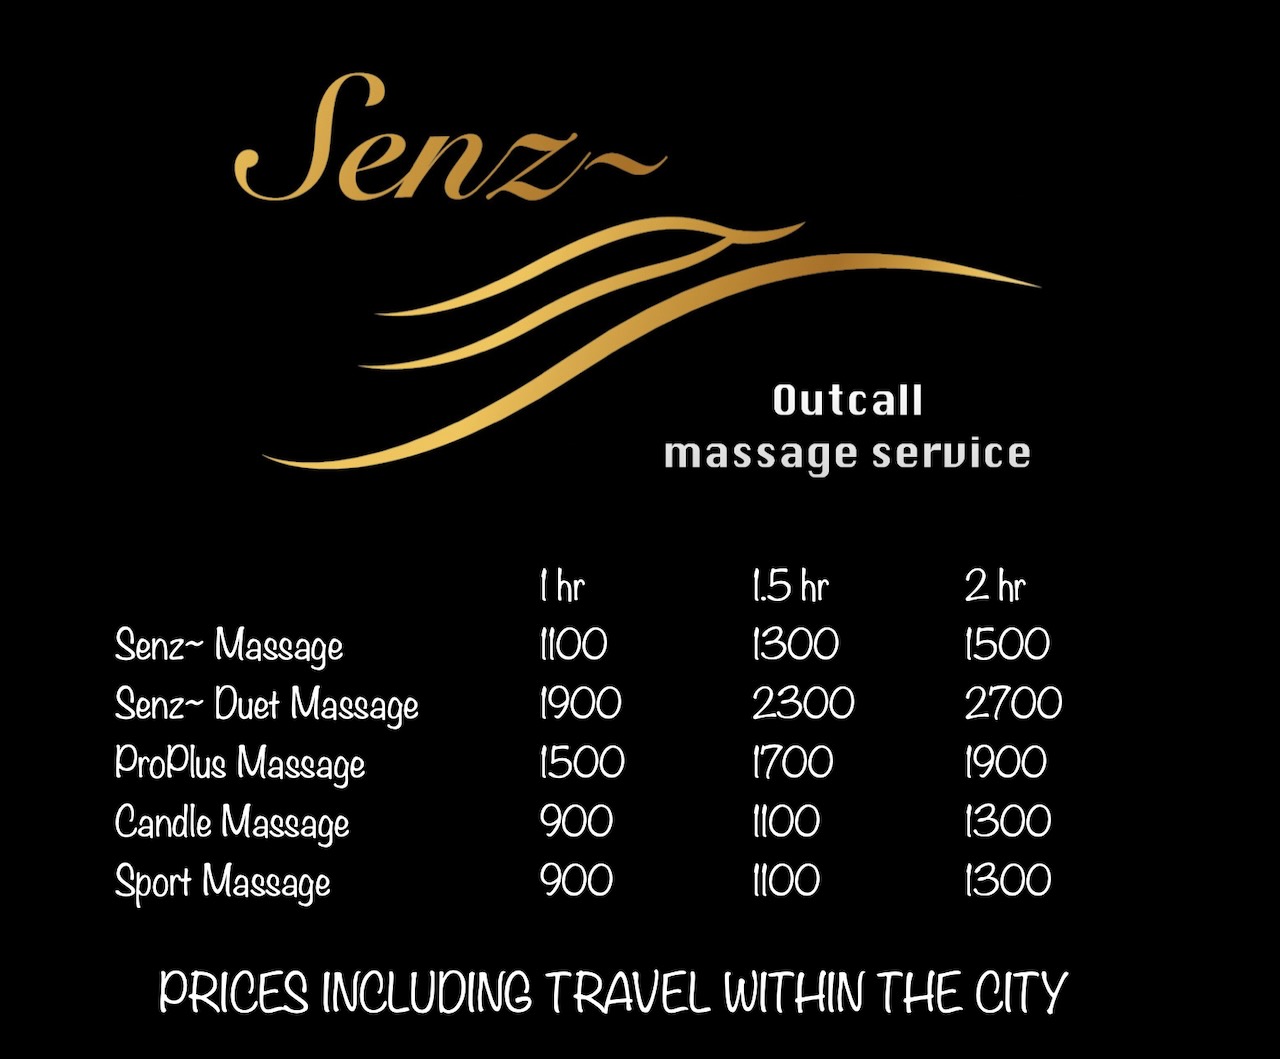 Senz Outcall Massage Services Chiang Mai menu